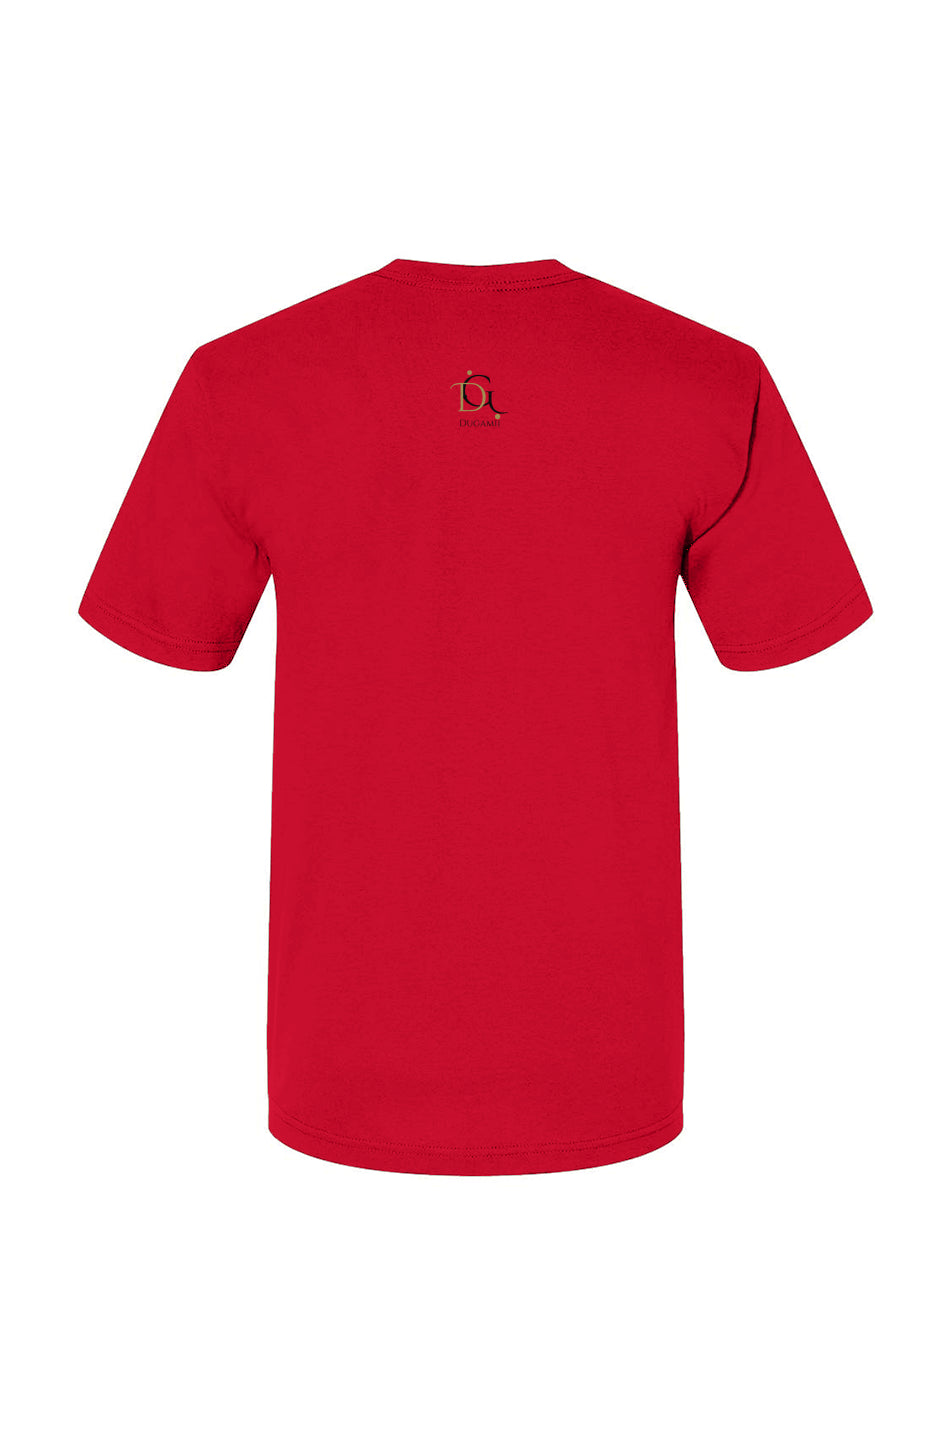 DuGamii "Basquait Inspired Word Art" Red T-Shirt 100% Cotton 